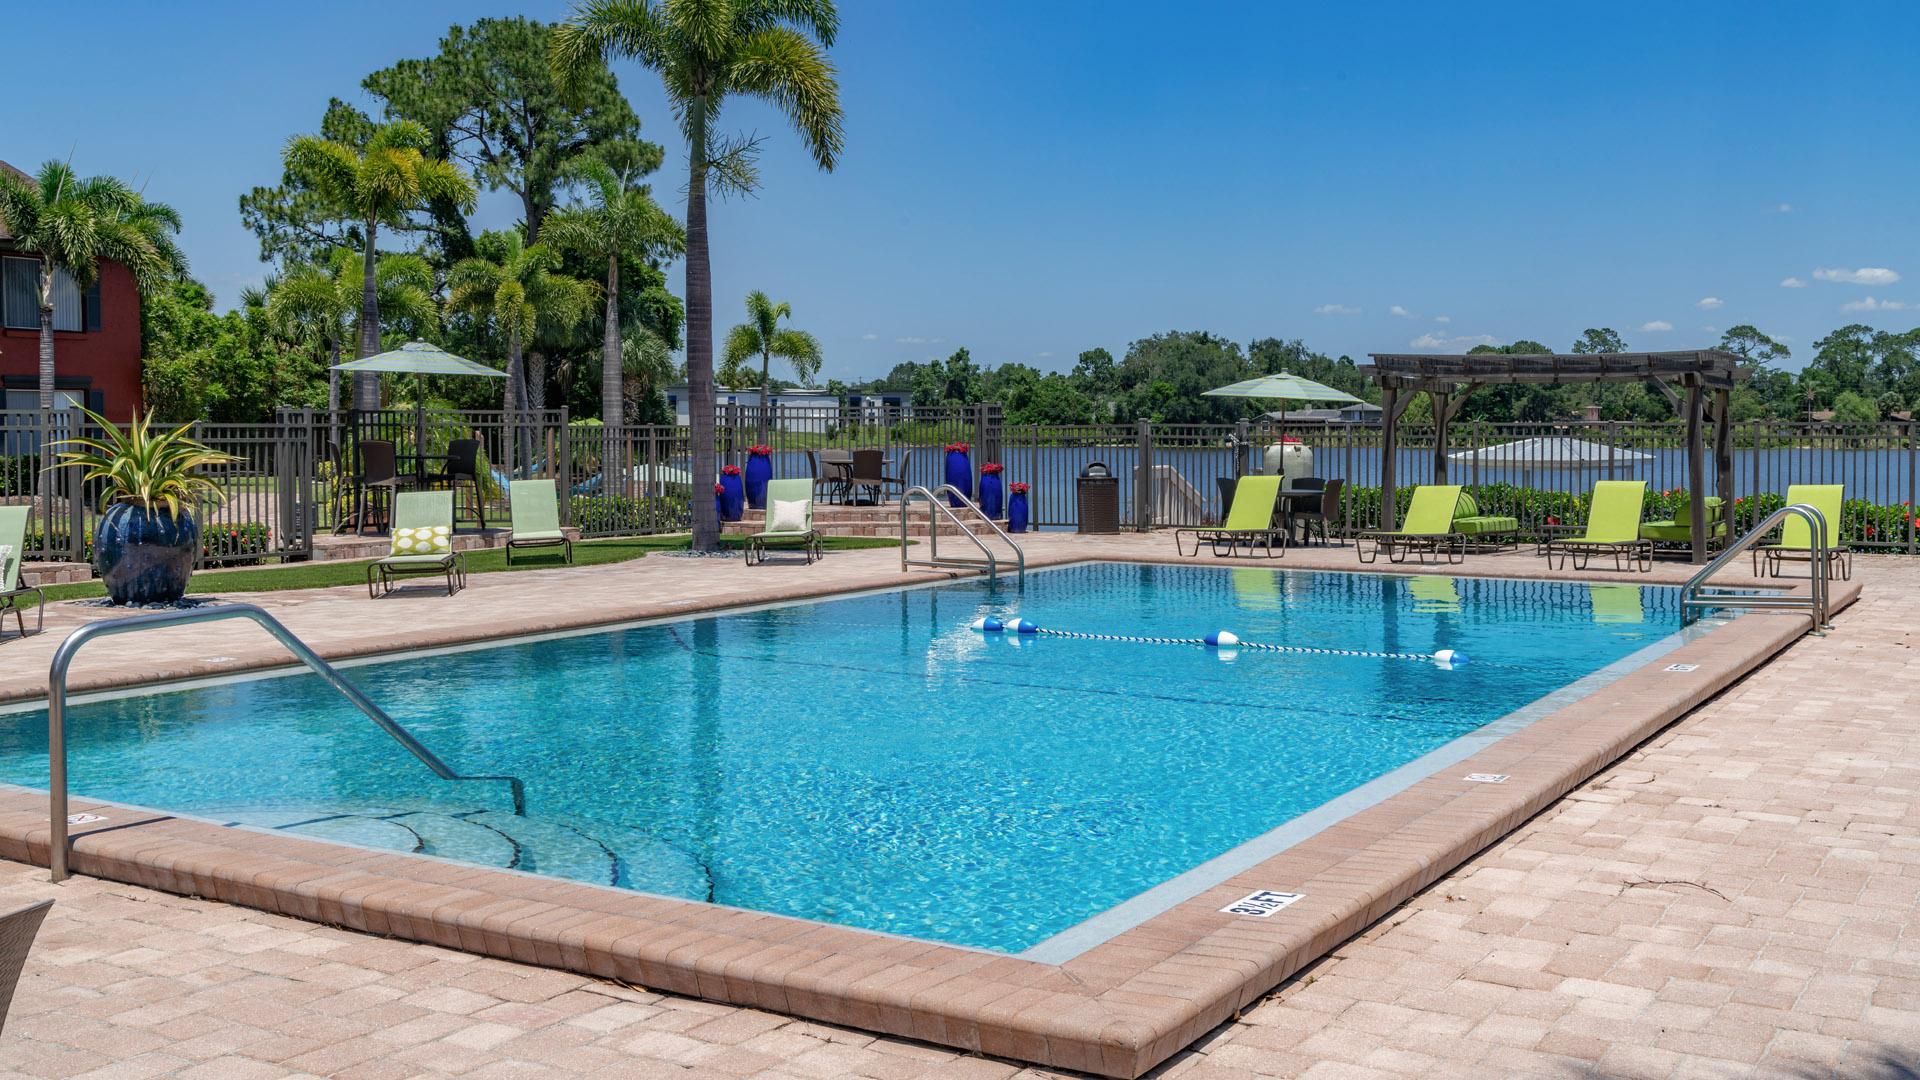 Resort-style swimming pool